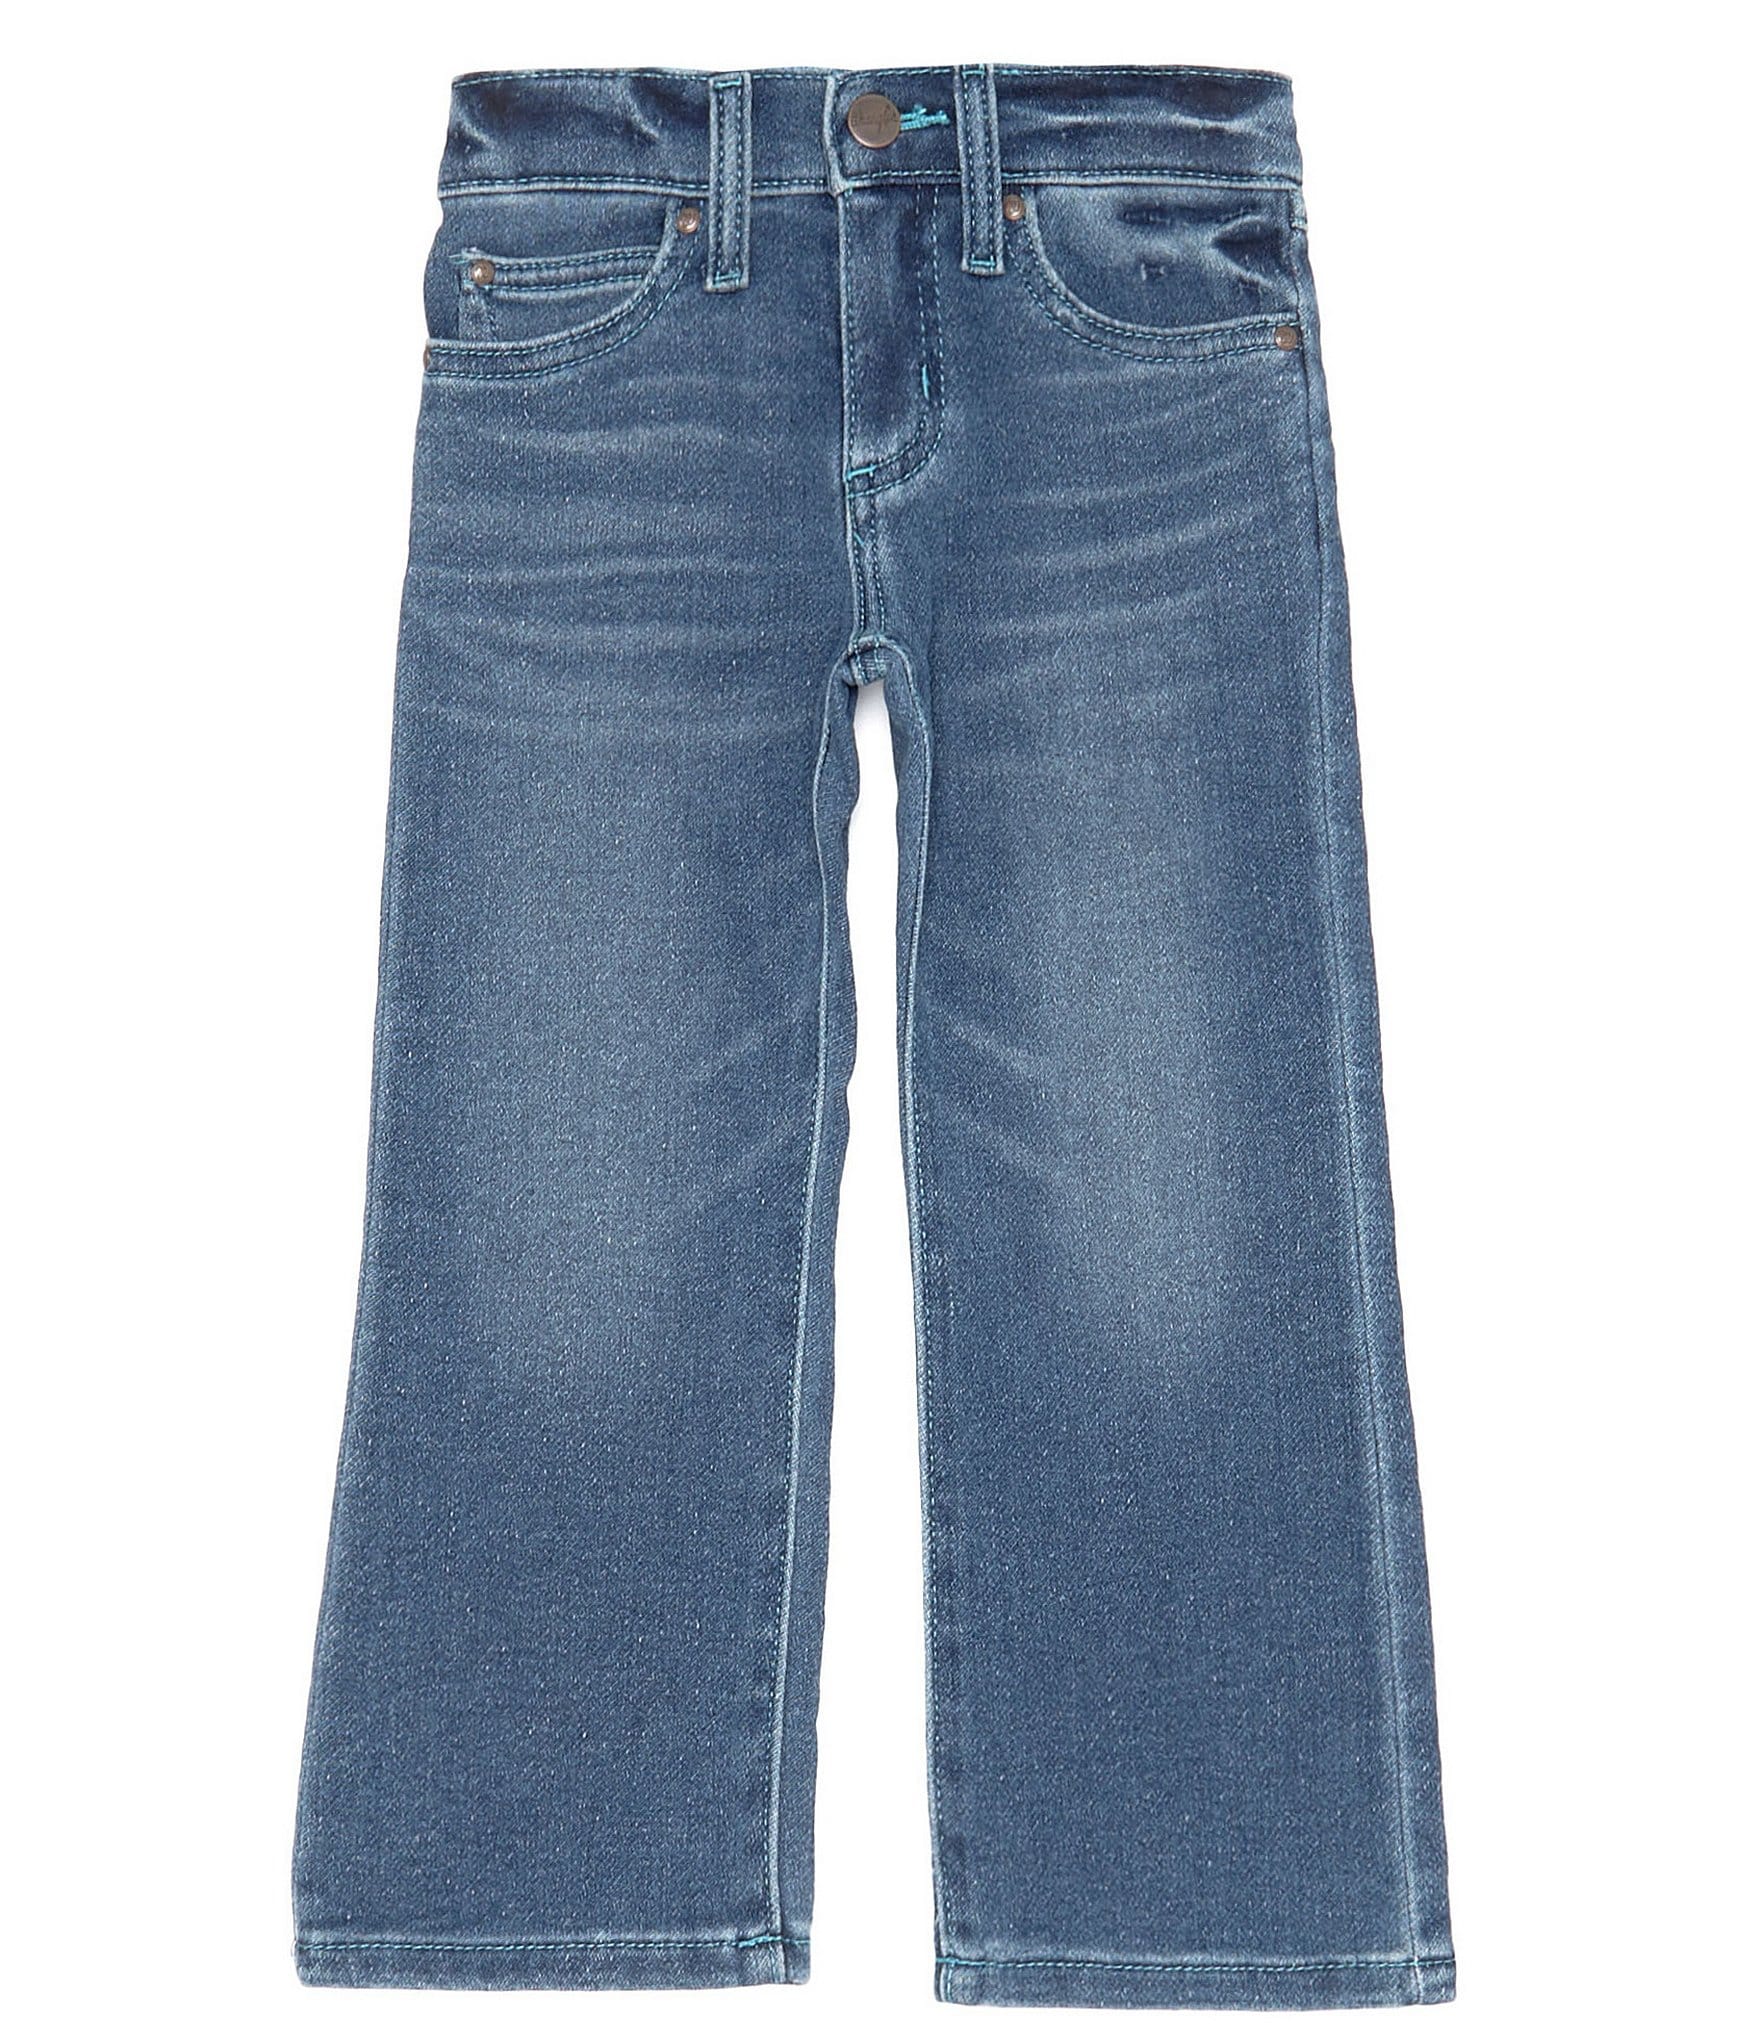 Wrangler® Toddler Girls 2T-4T Melanie Bootcut Jeans | Dillard's